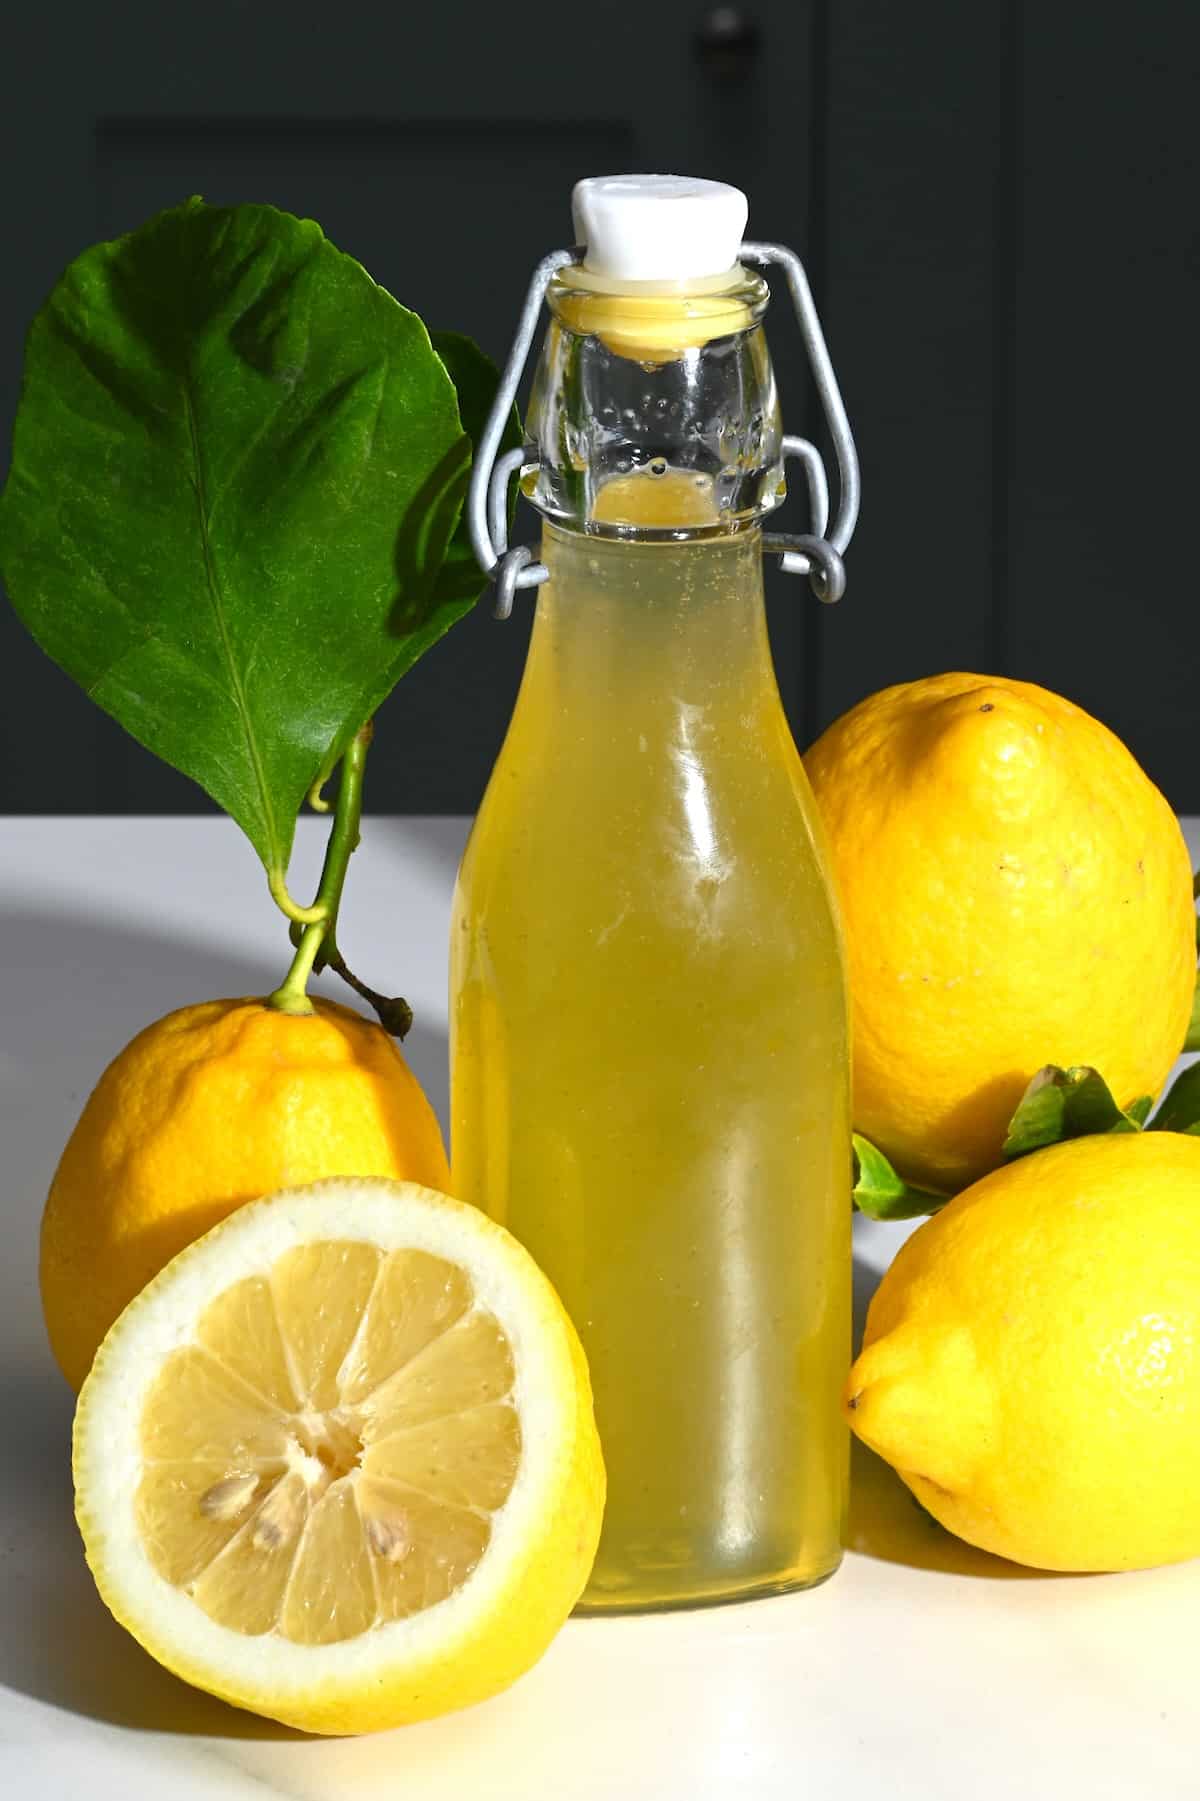 Homemade lemon syrup in a bottle